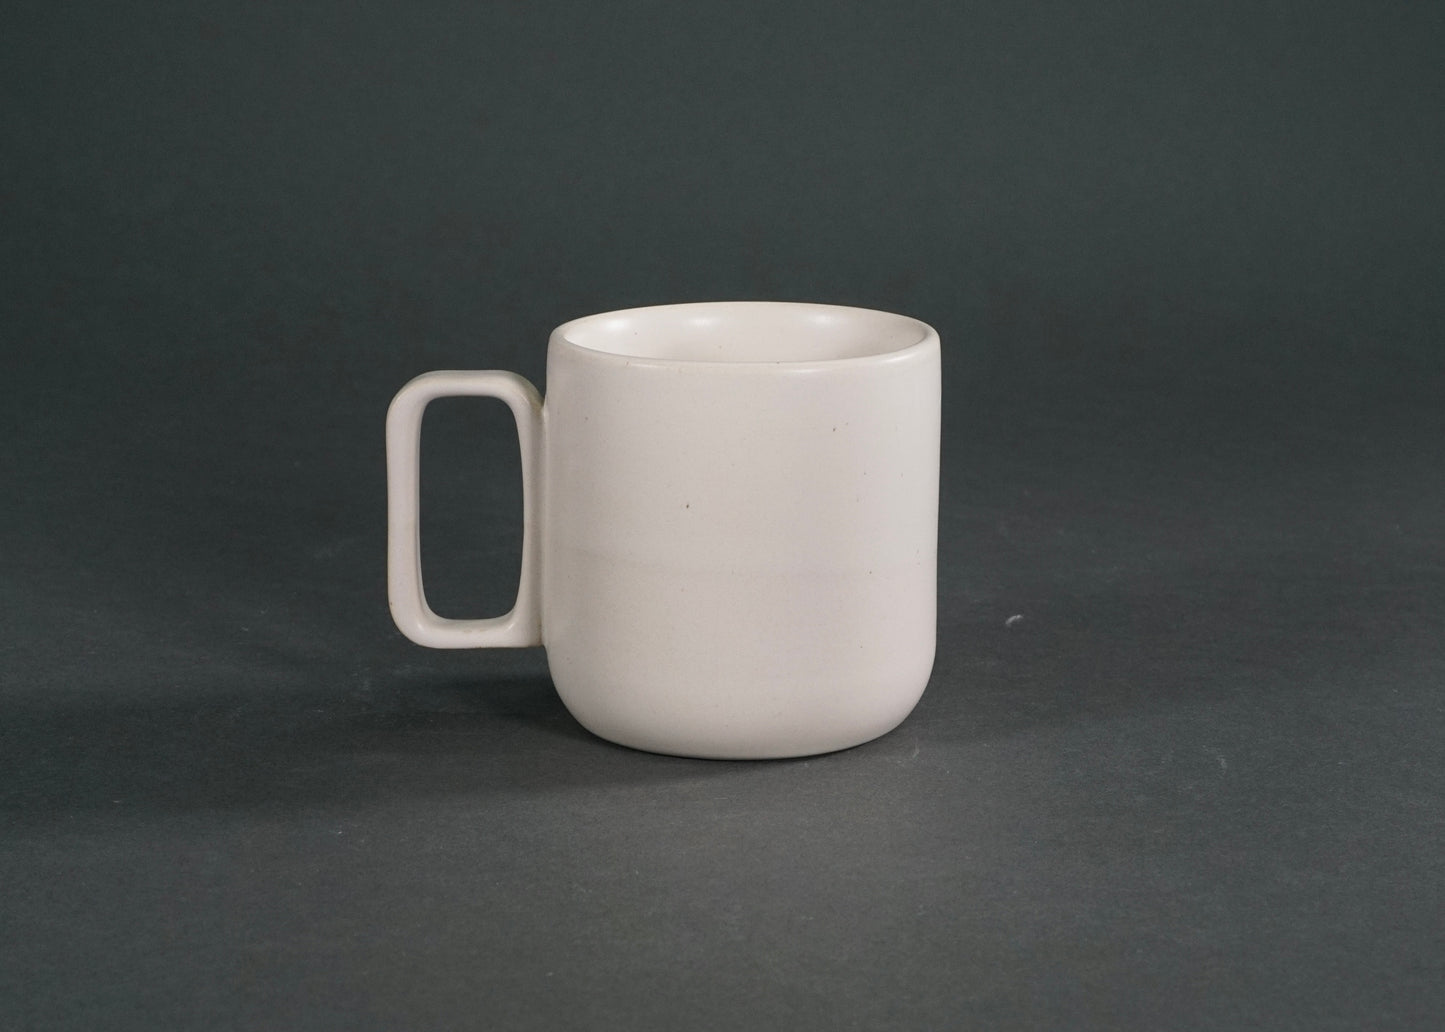 The Standard Mug